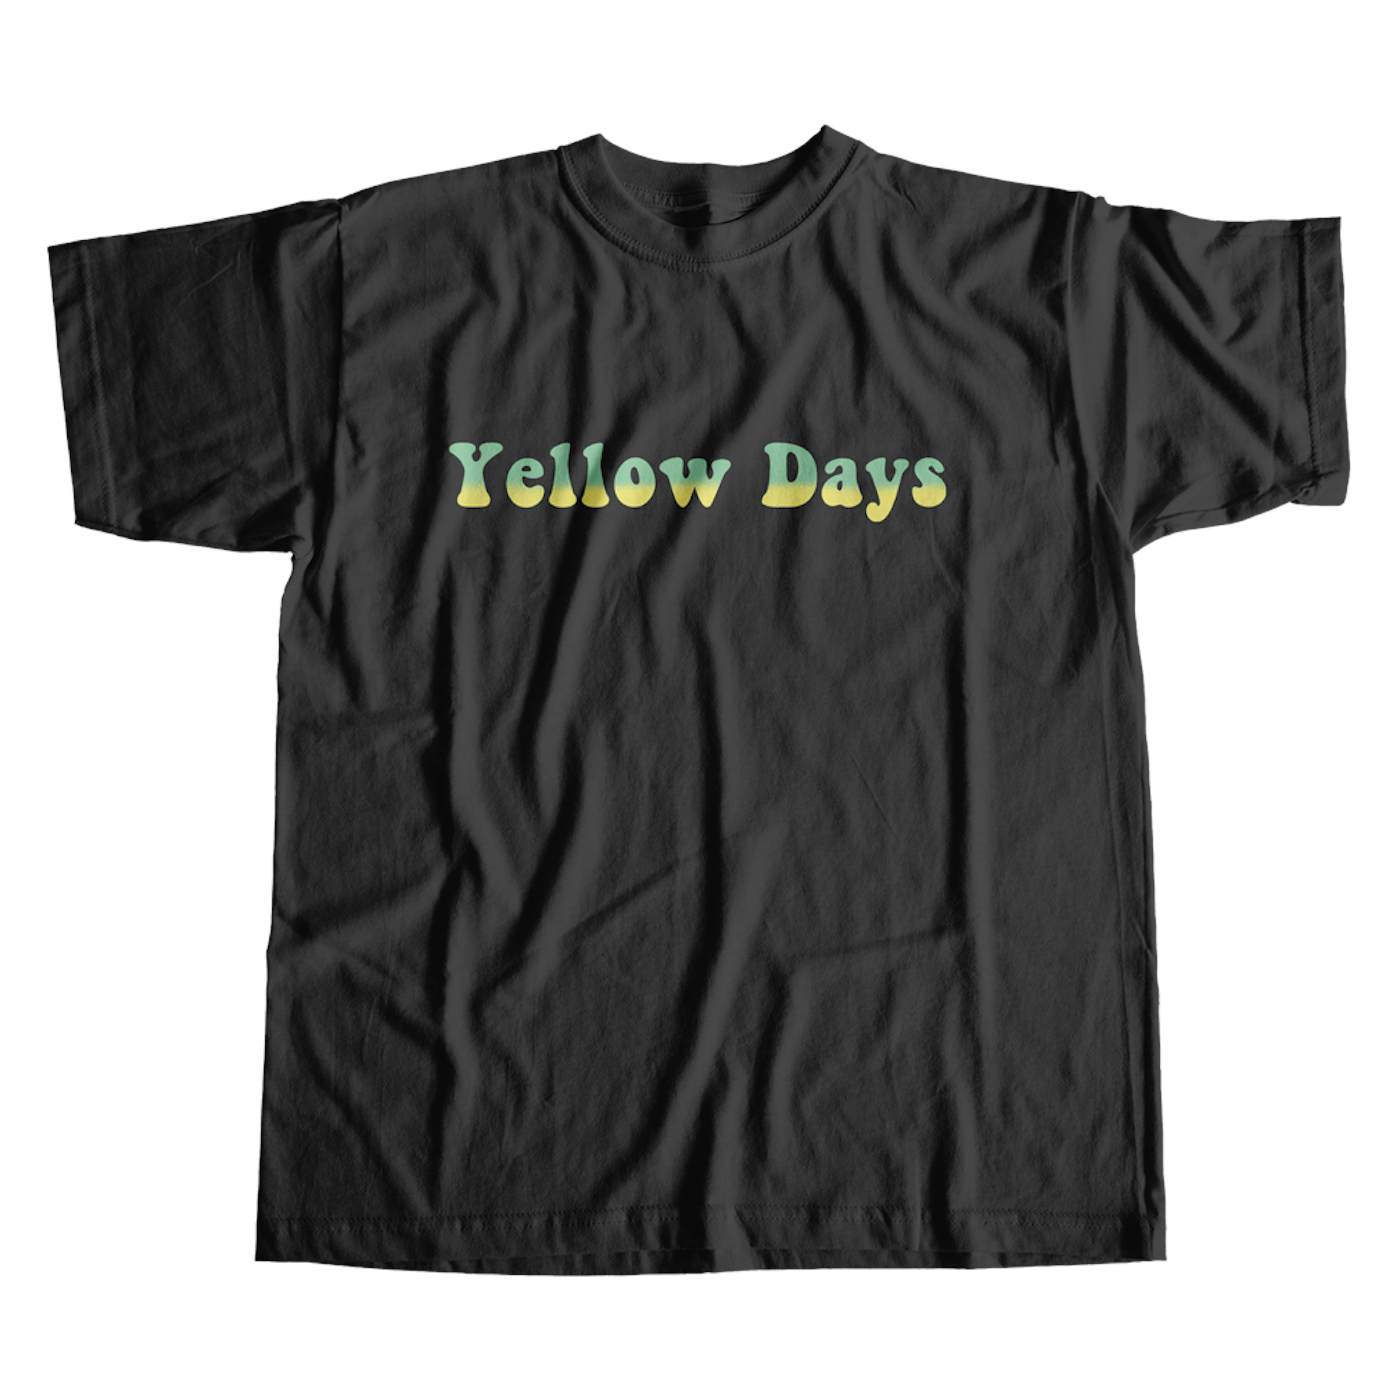 Yellow Days Treat You Right Tee w/ Liam Hopkins (Black)